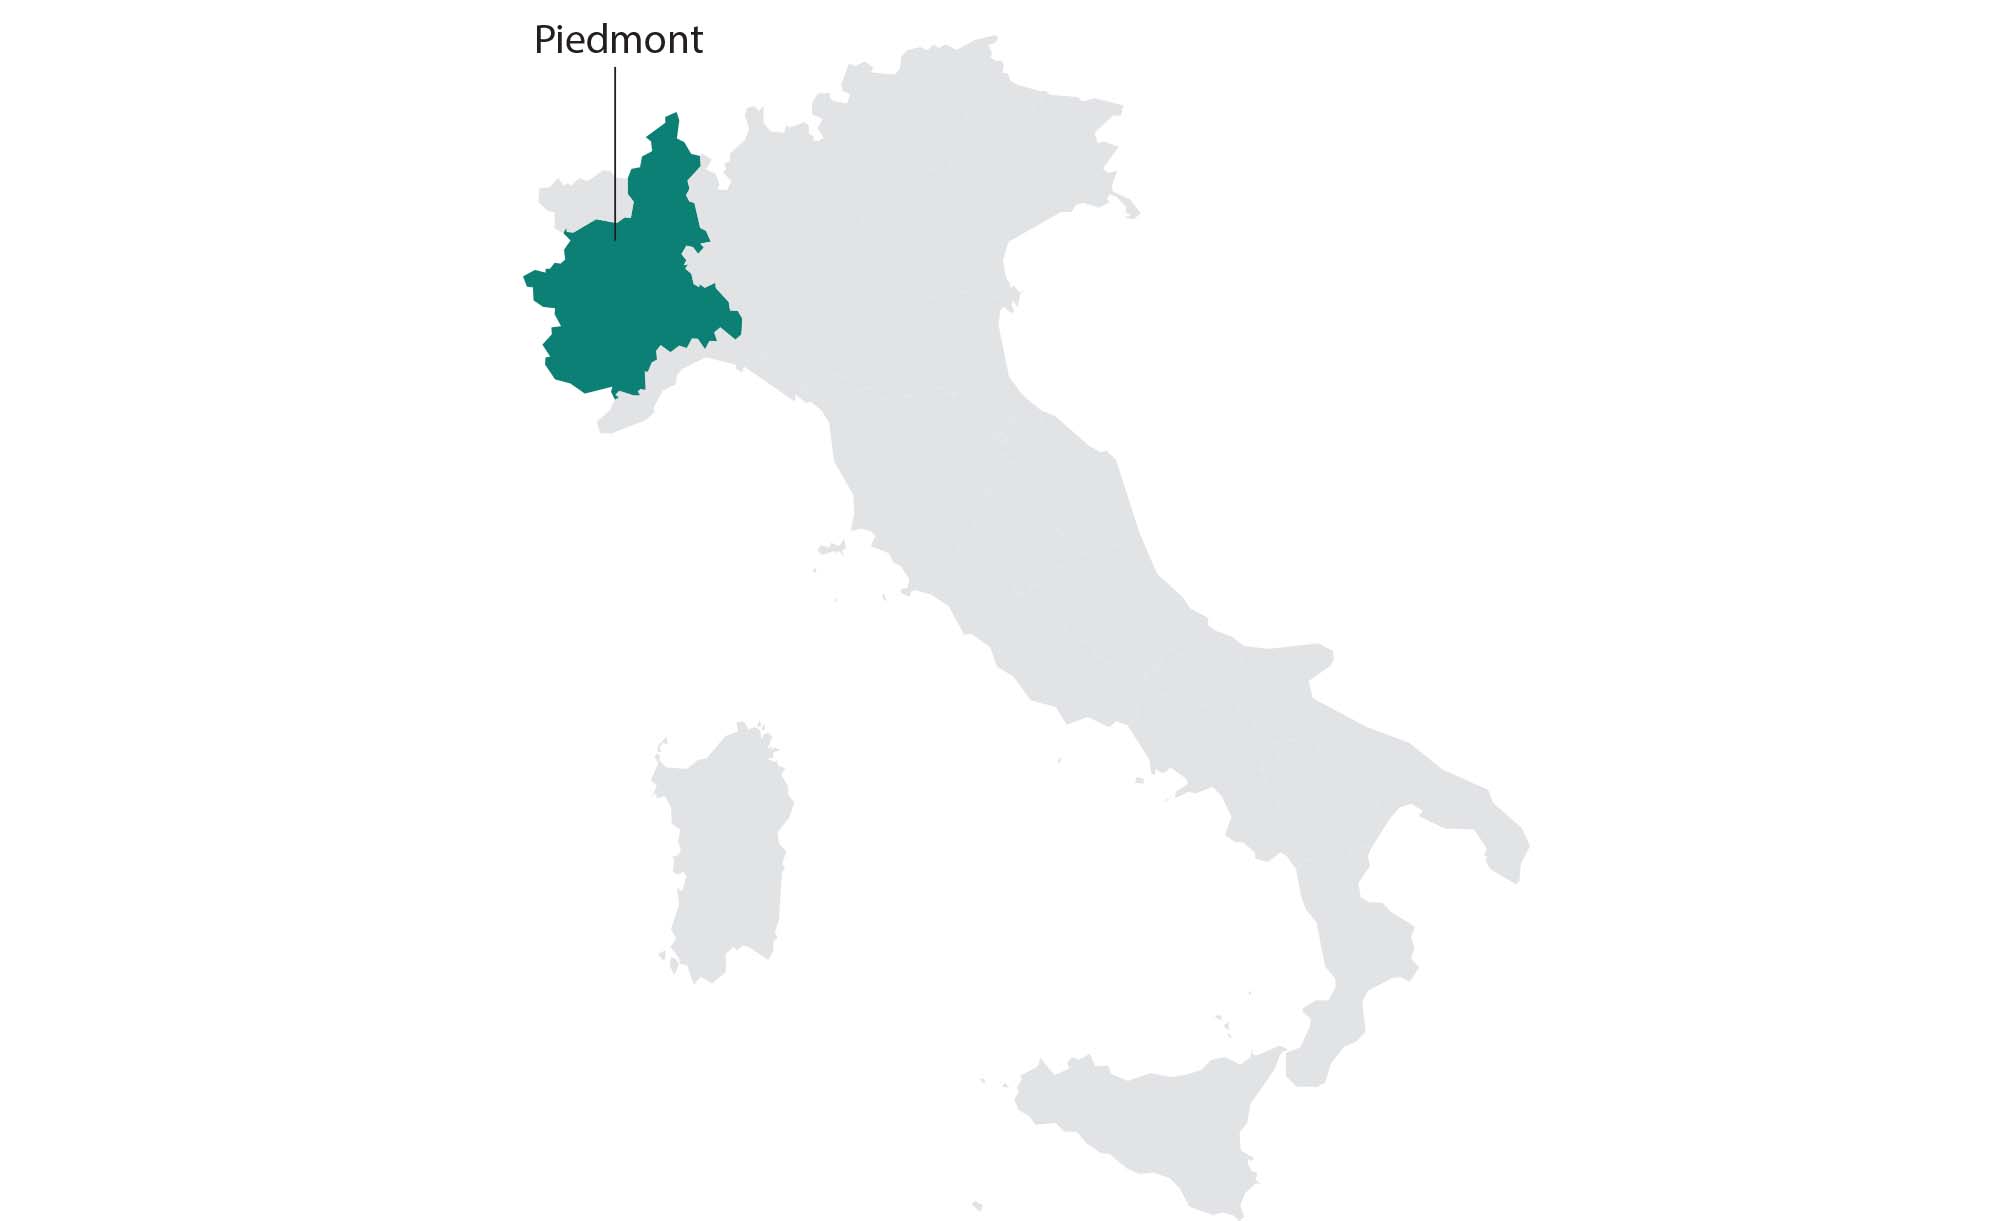 moscato winemaking region in Italy: Piedmont